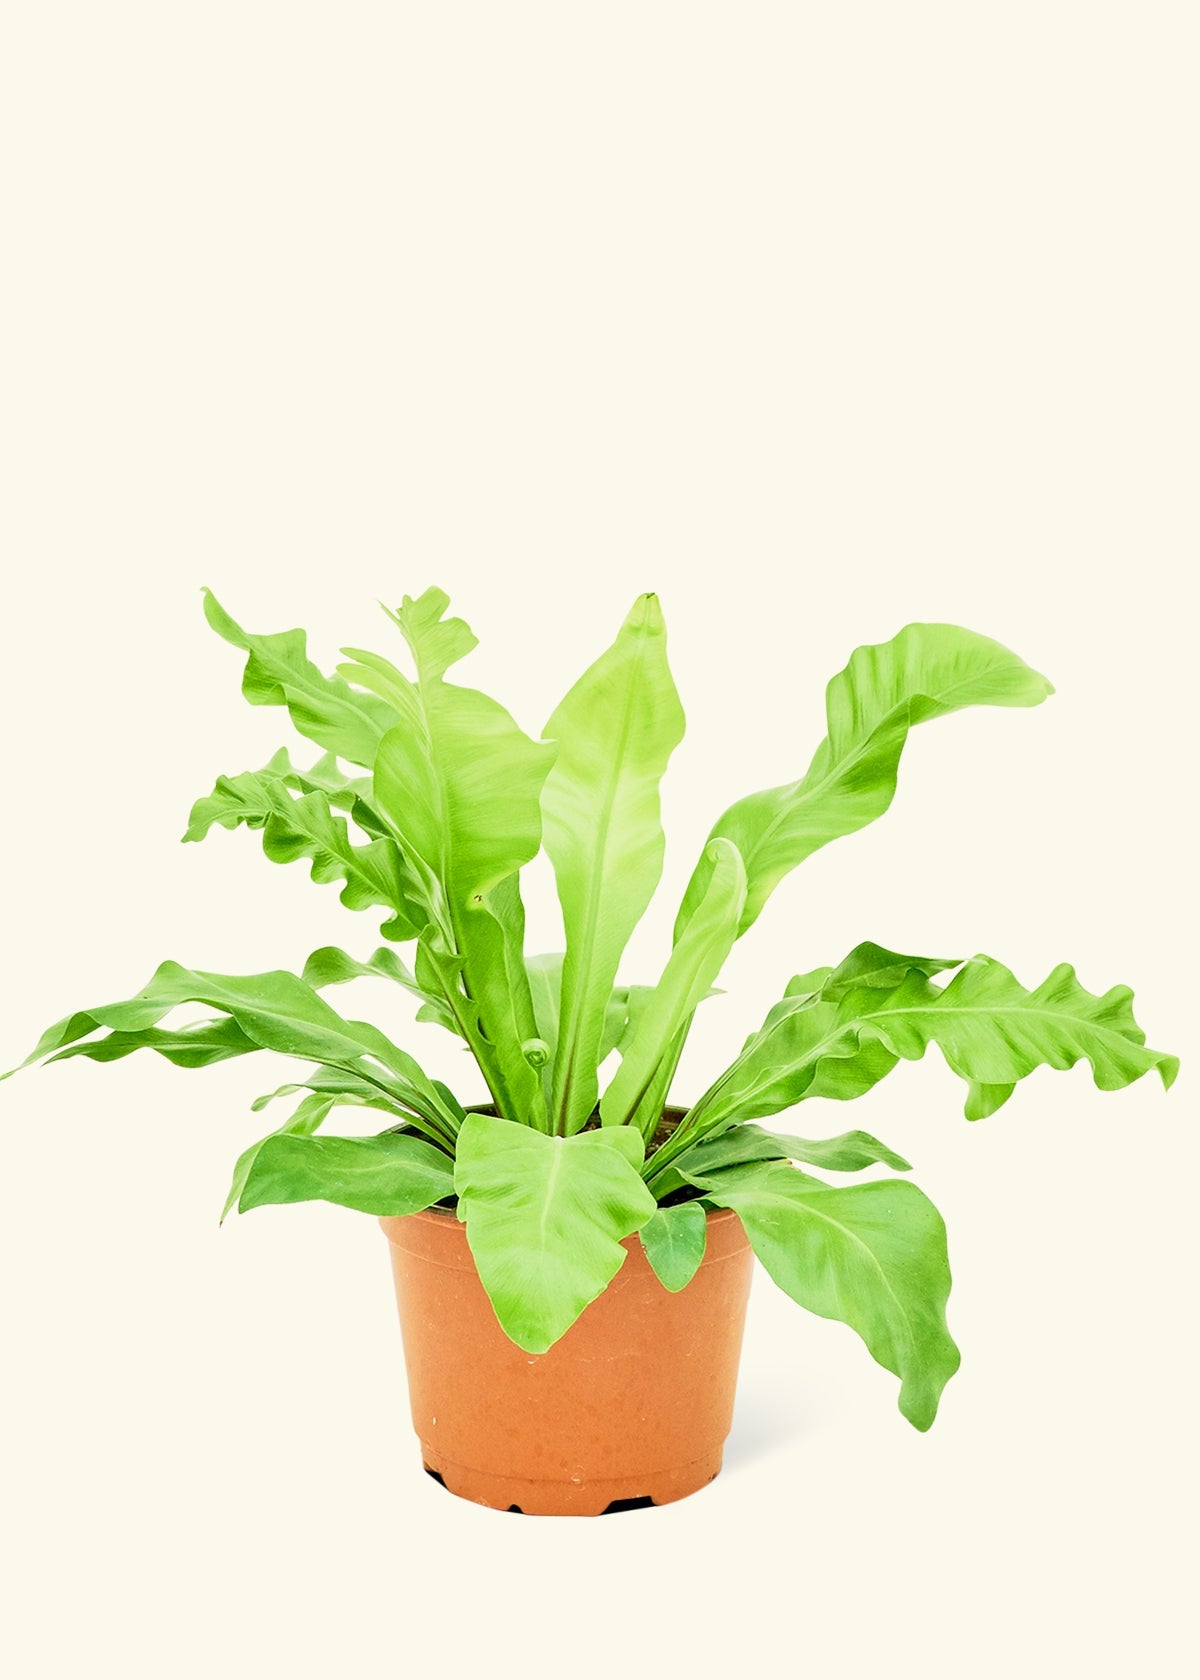 Easy Care Fern Plants